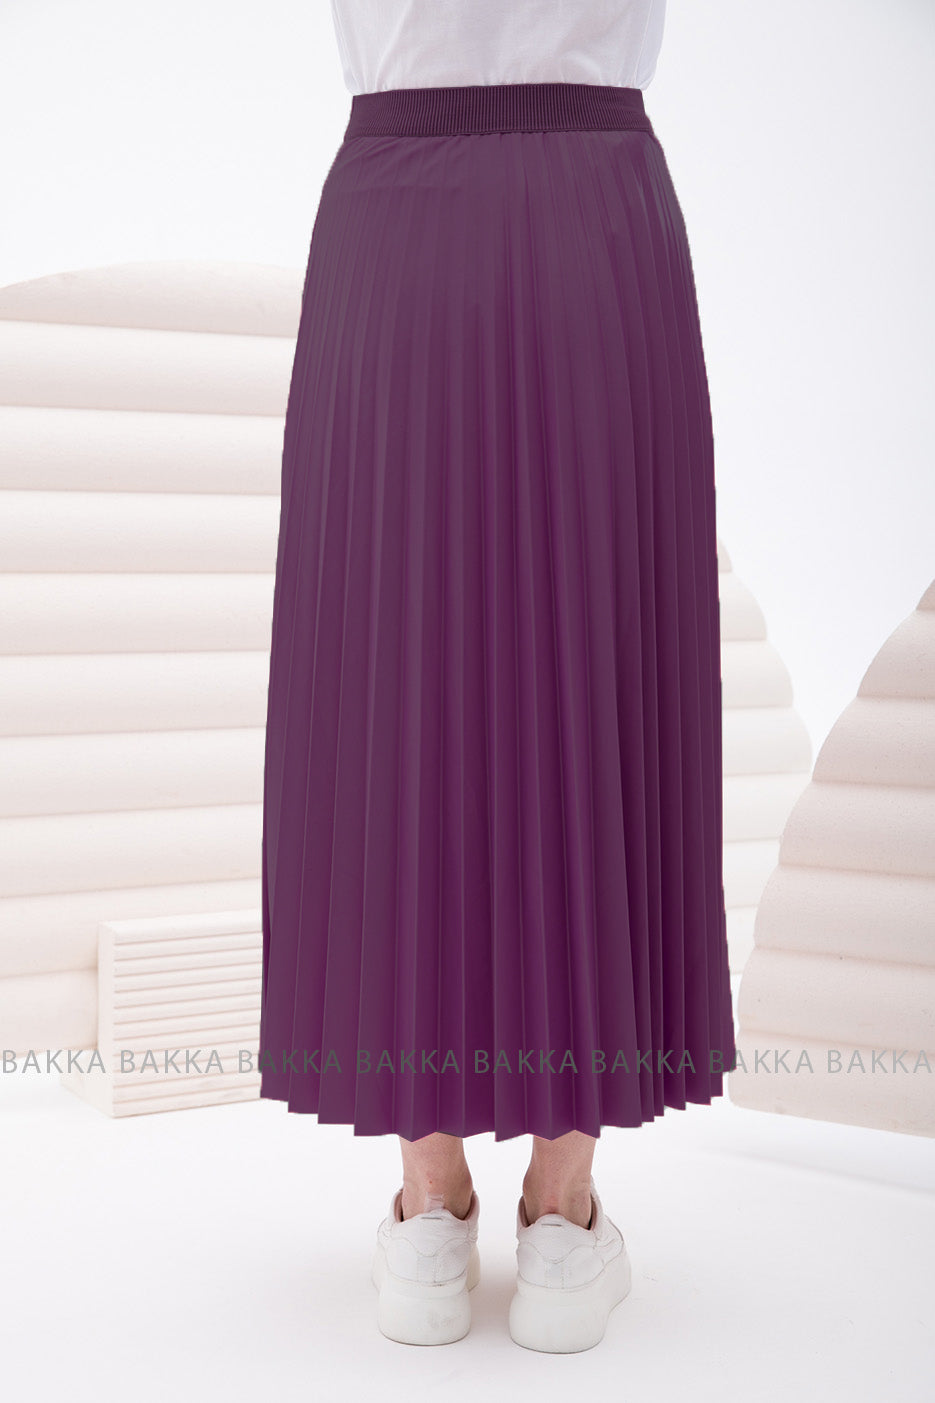 Skirt - 2170 - Dark Purple - bakkaclothing